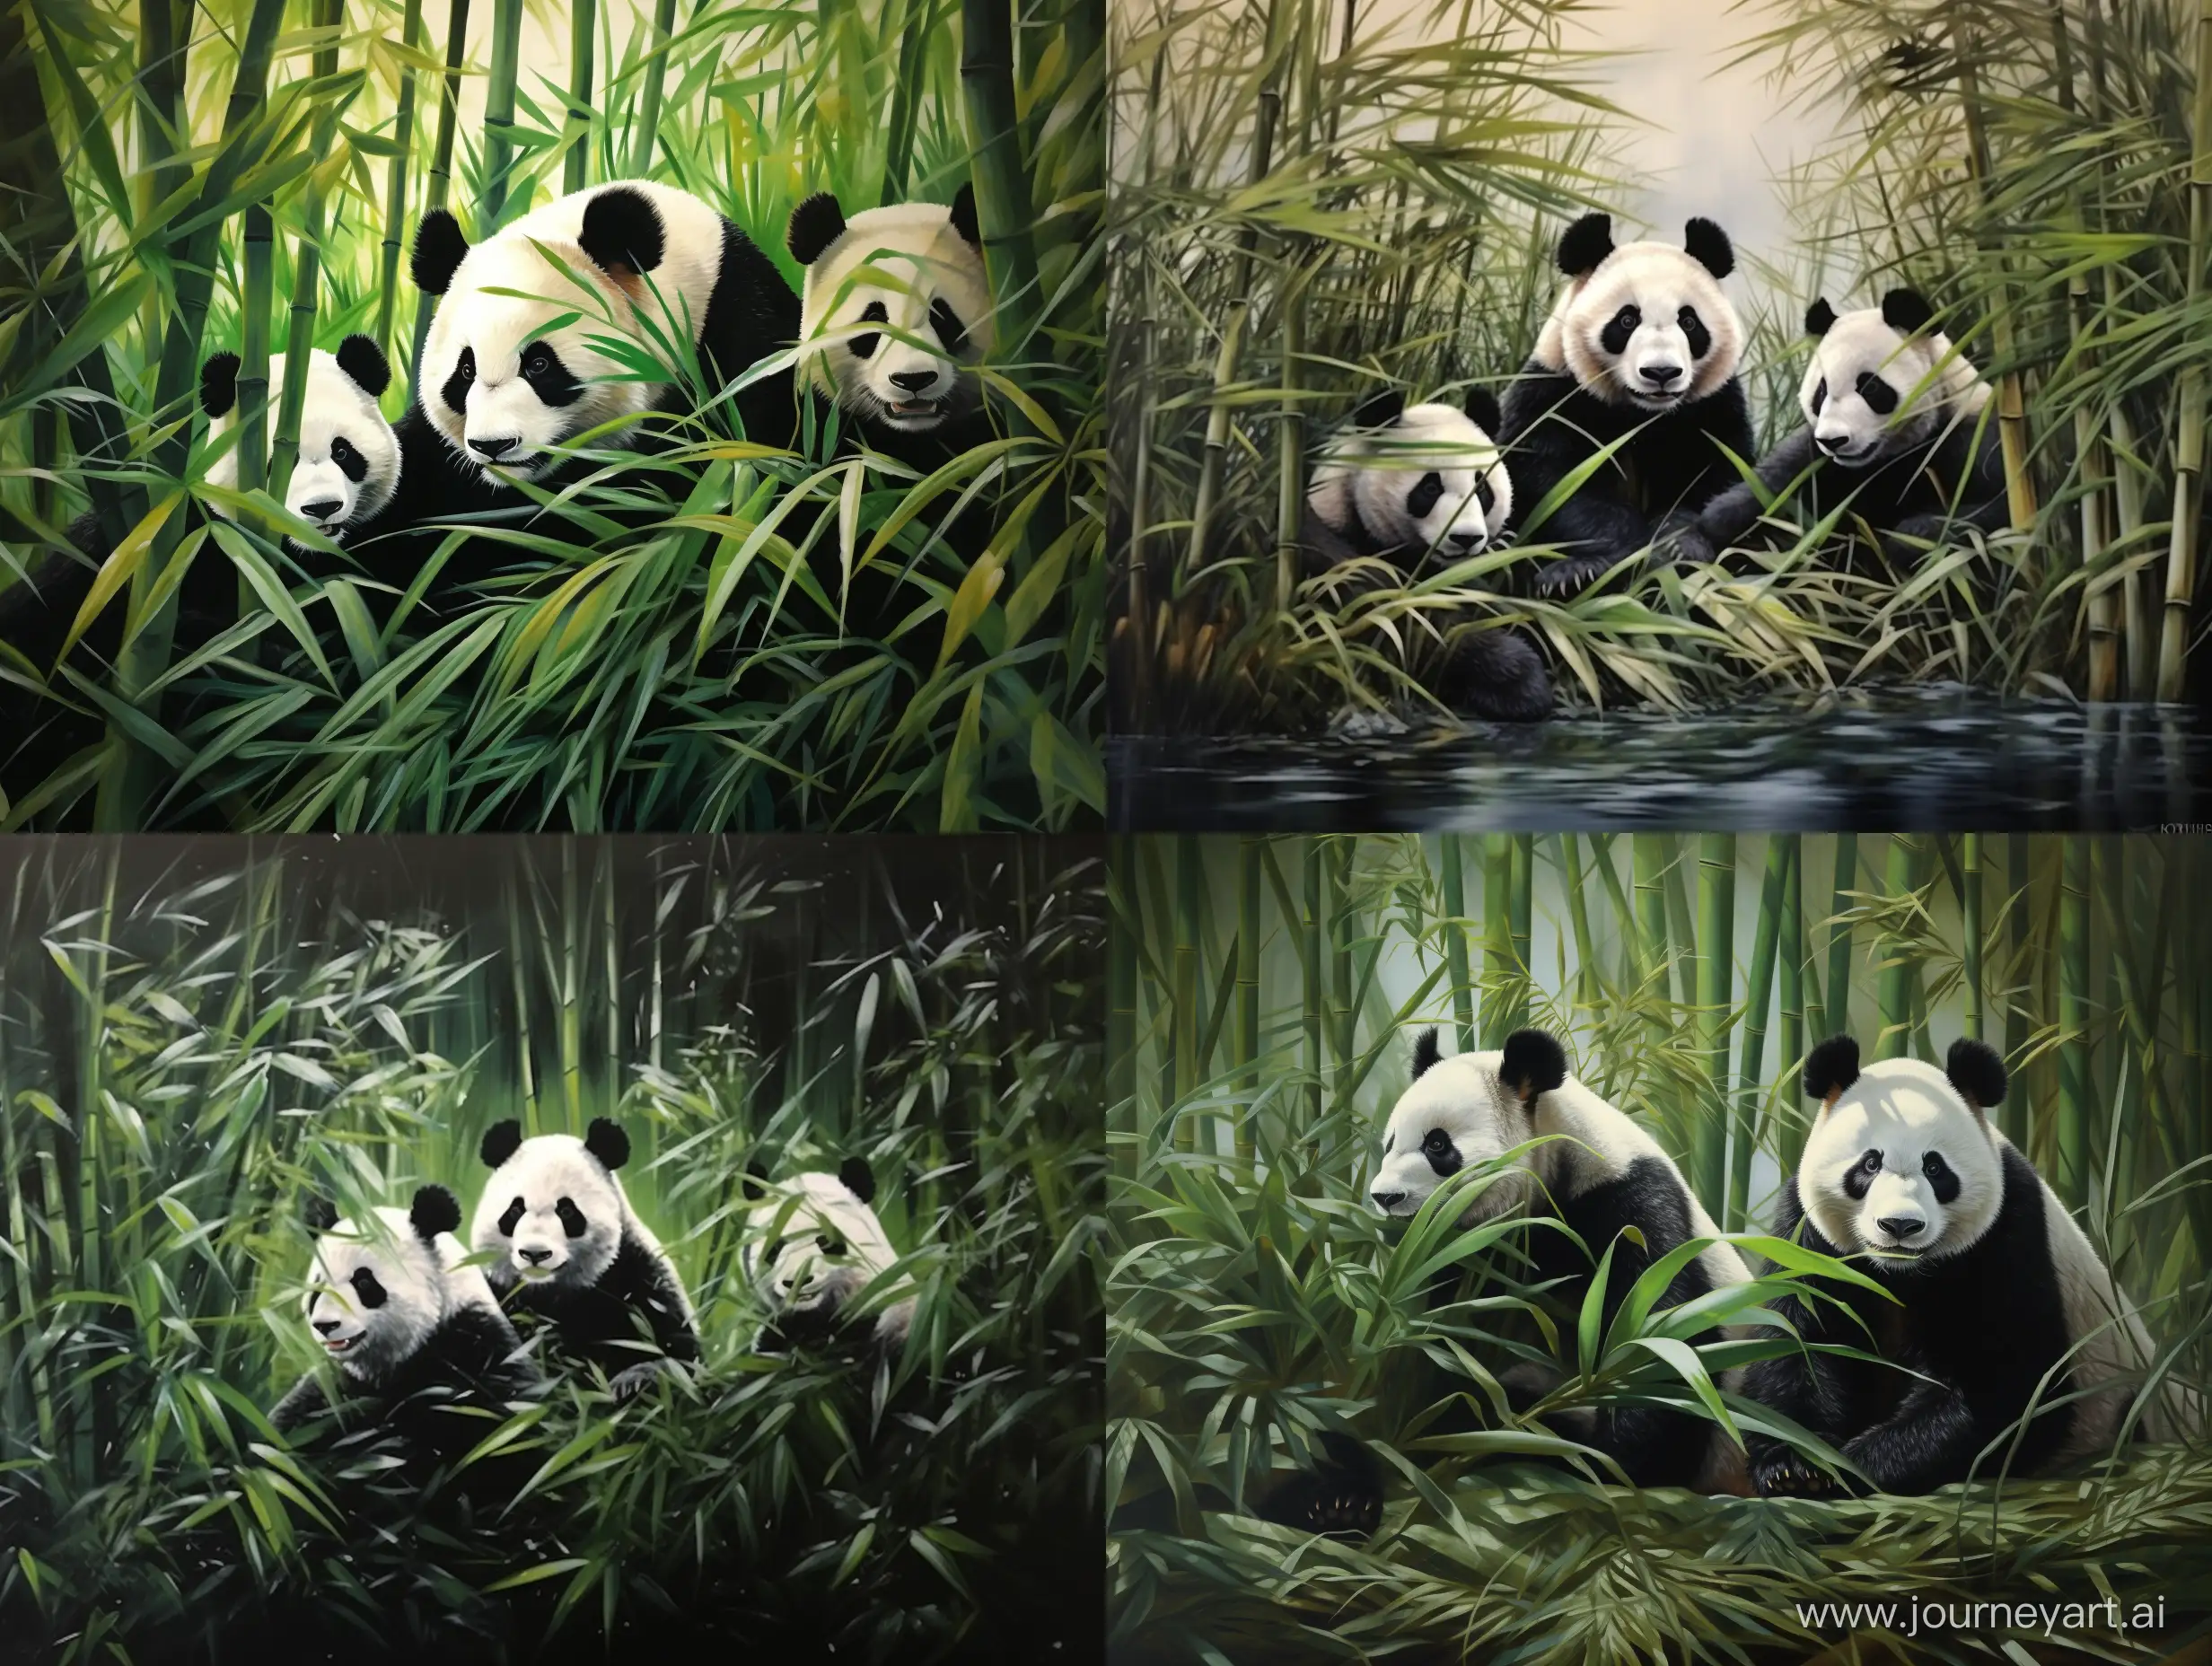 Four-Pandas-Enjoying-Bamboo-in-a-Natural-Setting